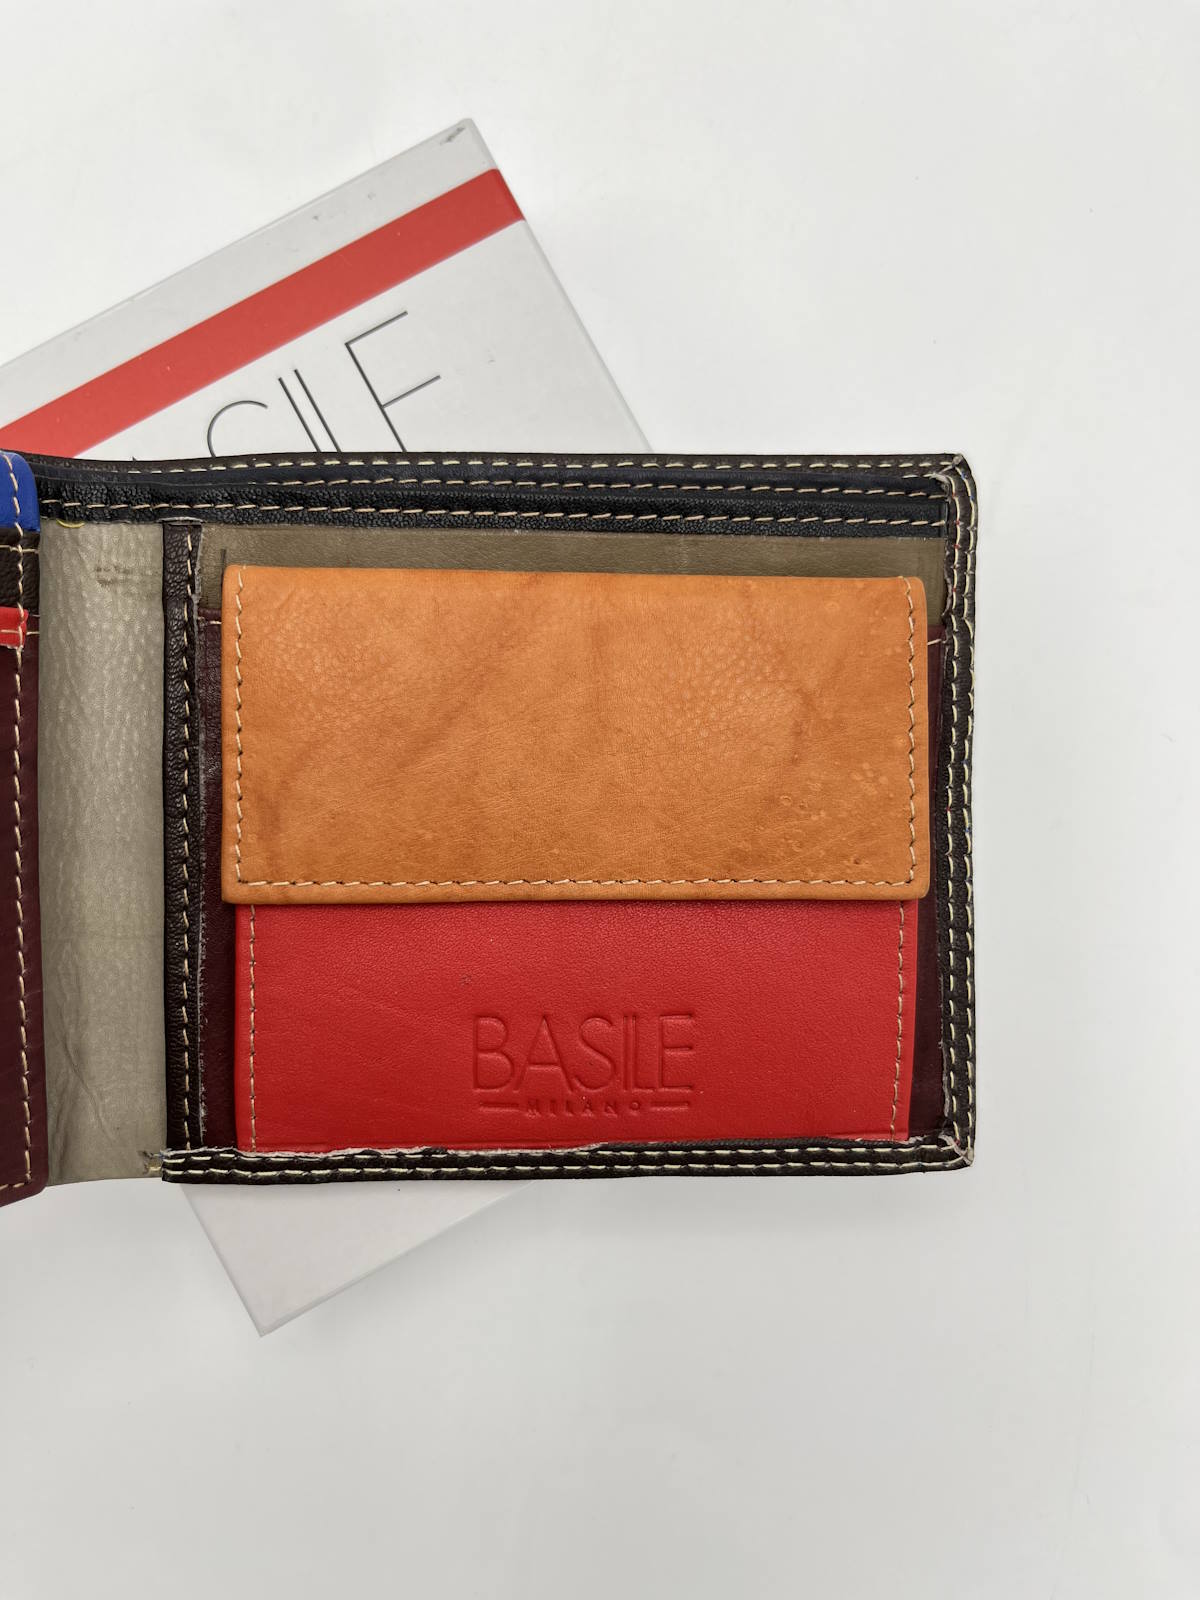 Genuine leather Wallet, Brand Basile, art. BA1905-2